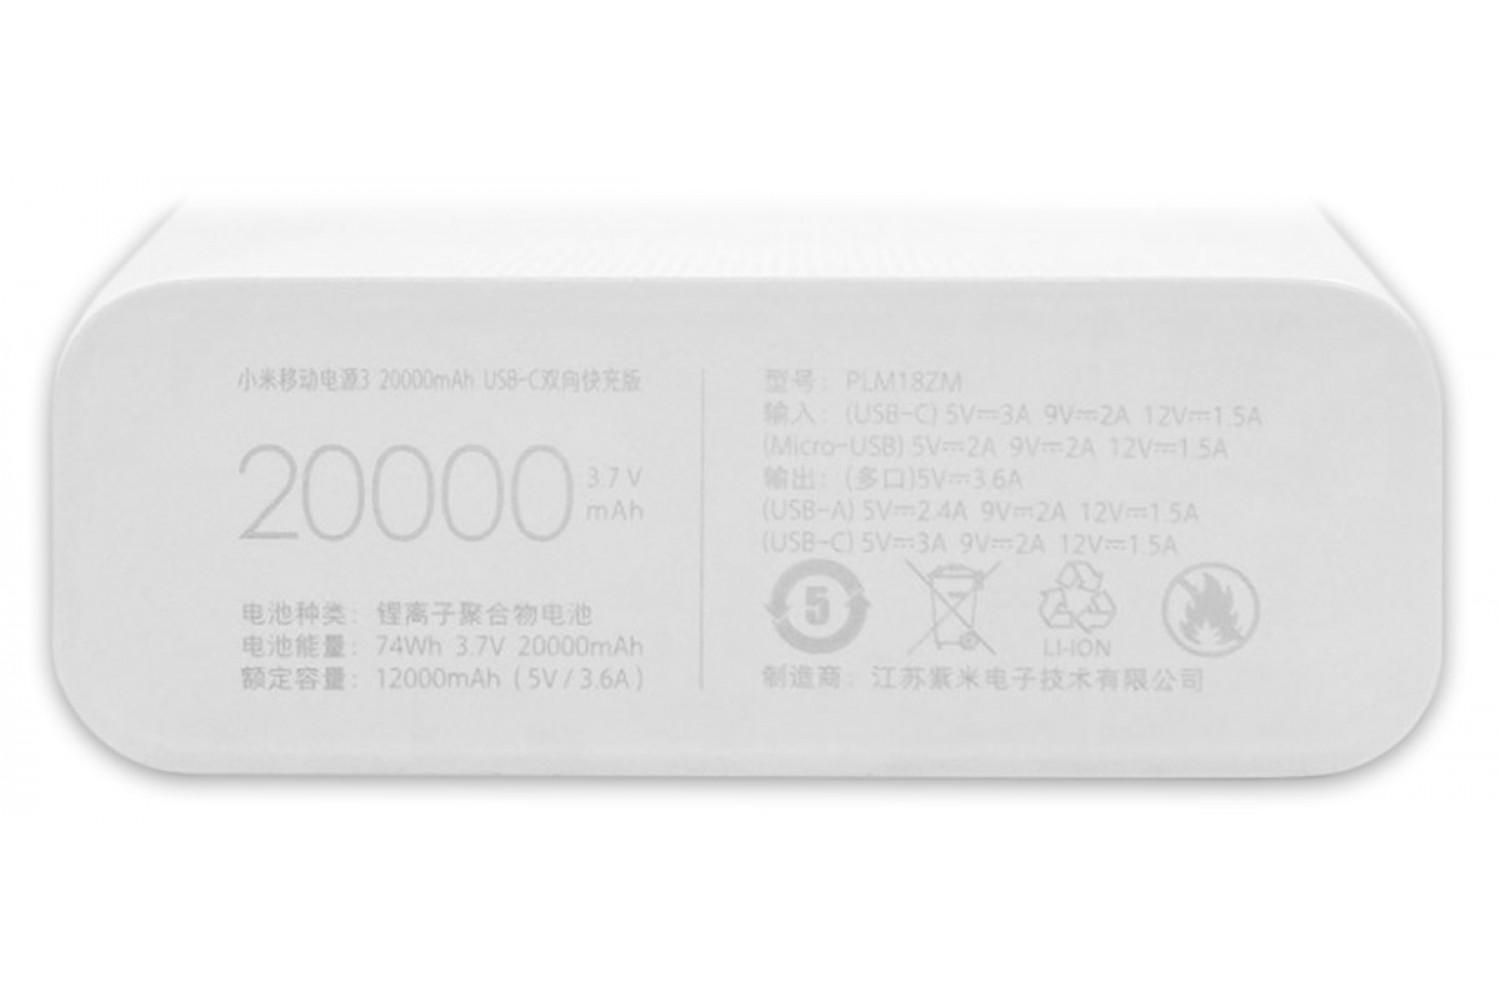 Аккумулятор xiaomi mi power bank 3 20000. Внешний аккумулятор Xiaomi Power Bank 3 2usb plm18zm 20000 Mah белый. Power Bank Xiaomi 3 20000mah plm18zm. Xiaomi Powerbank mi Power 3 Pro. Power Bank Xiaomi mi 3 20000 Mah plm18zm портативный аккумулятор.